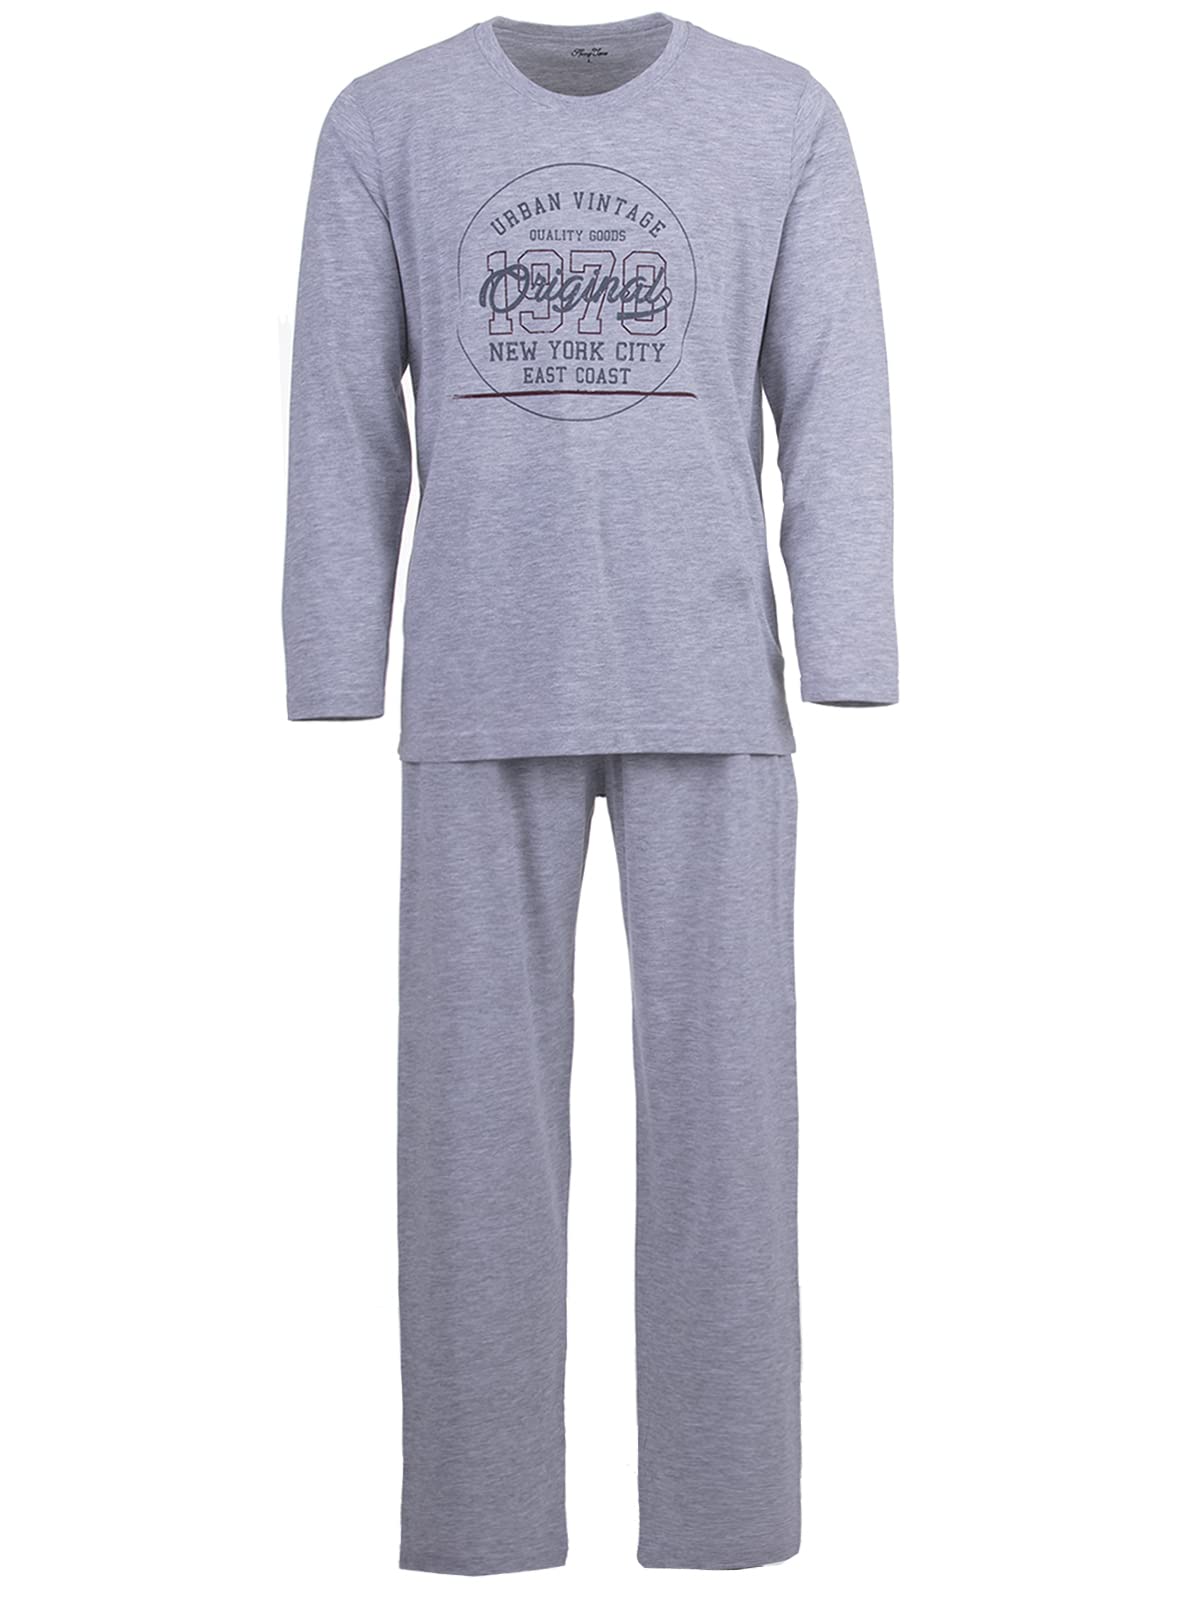 LUCKY Herren Pyjama lang Schlafanzug Pyjama Set Druck Motiv, Farbe:Grau, Größe:XXL